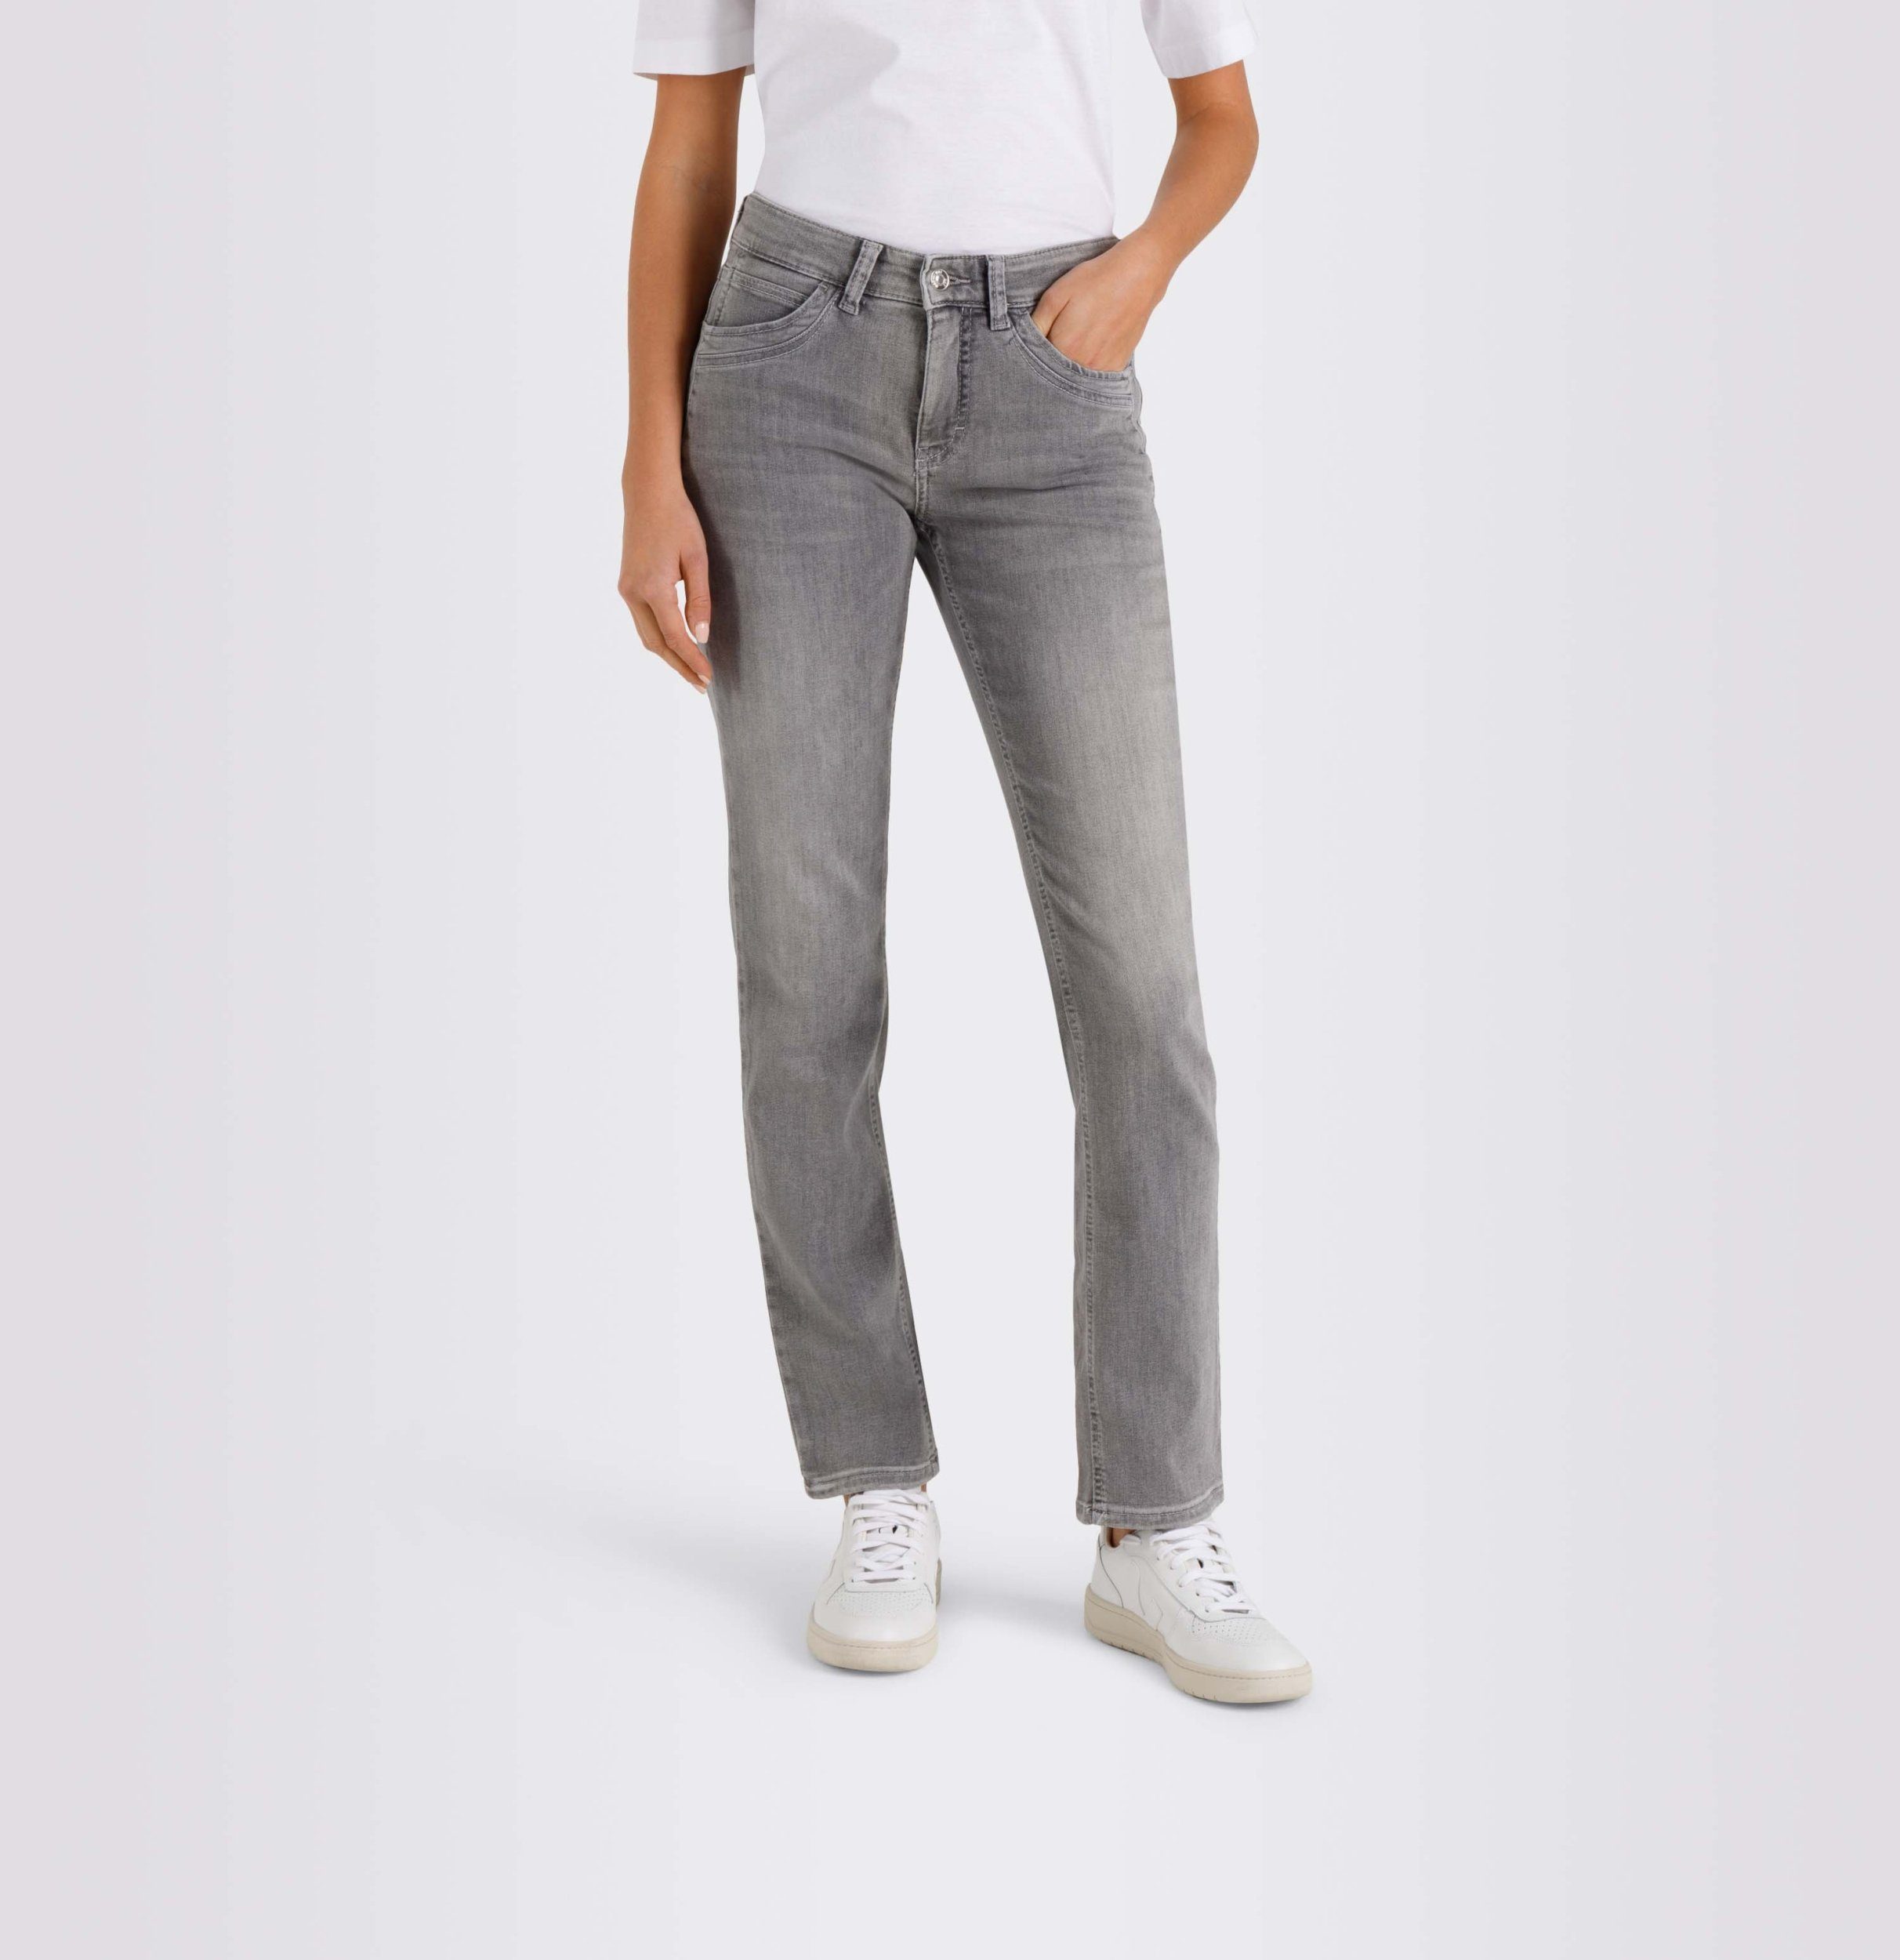 JEANS - ANGELA Light new, denim authentic 5-Pocket-Jeans MAC